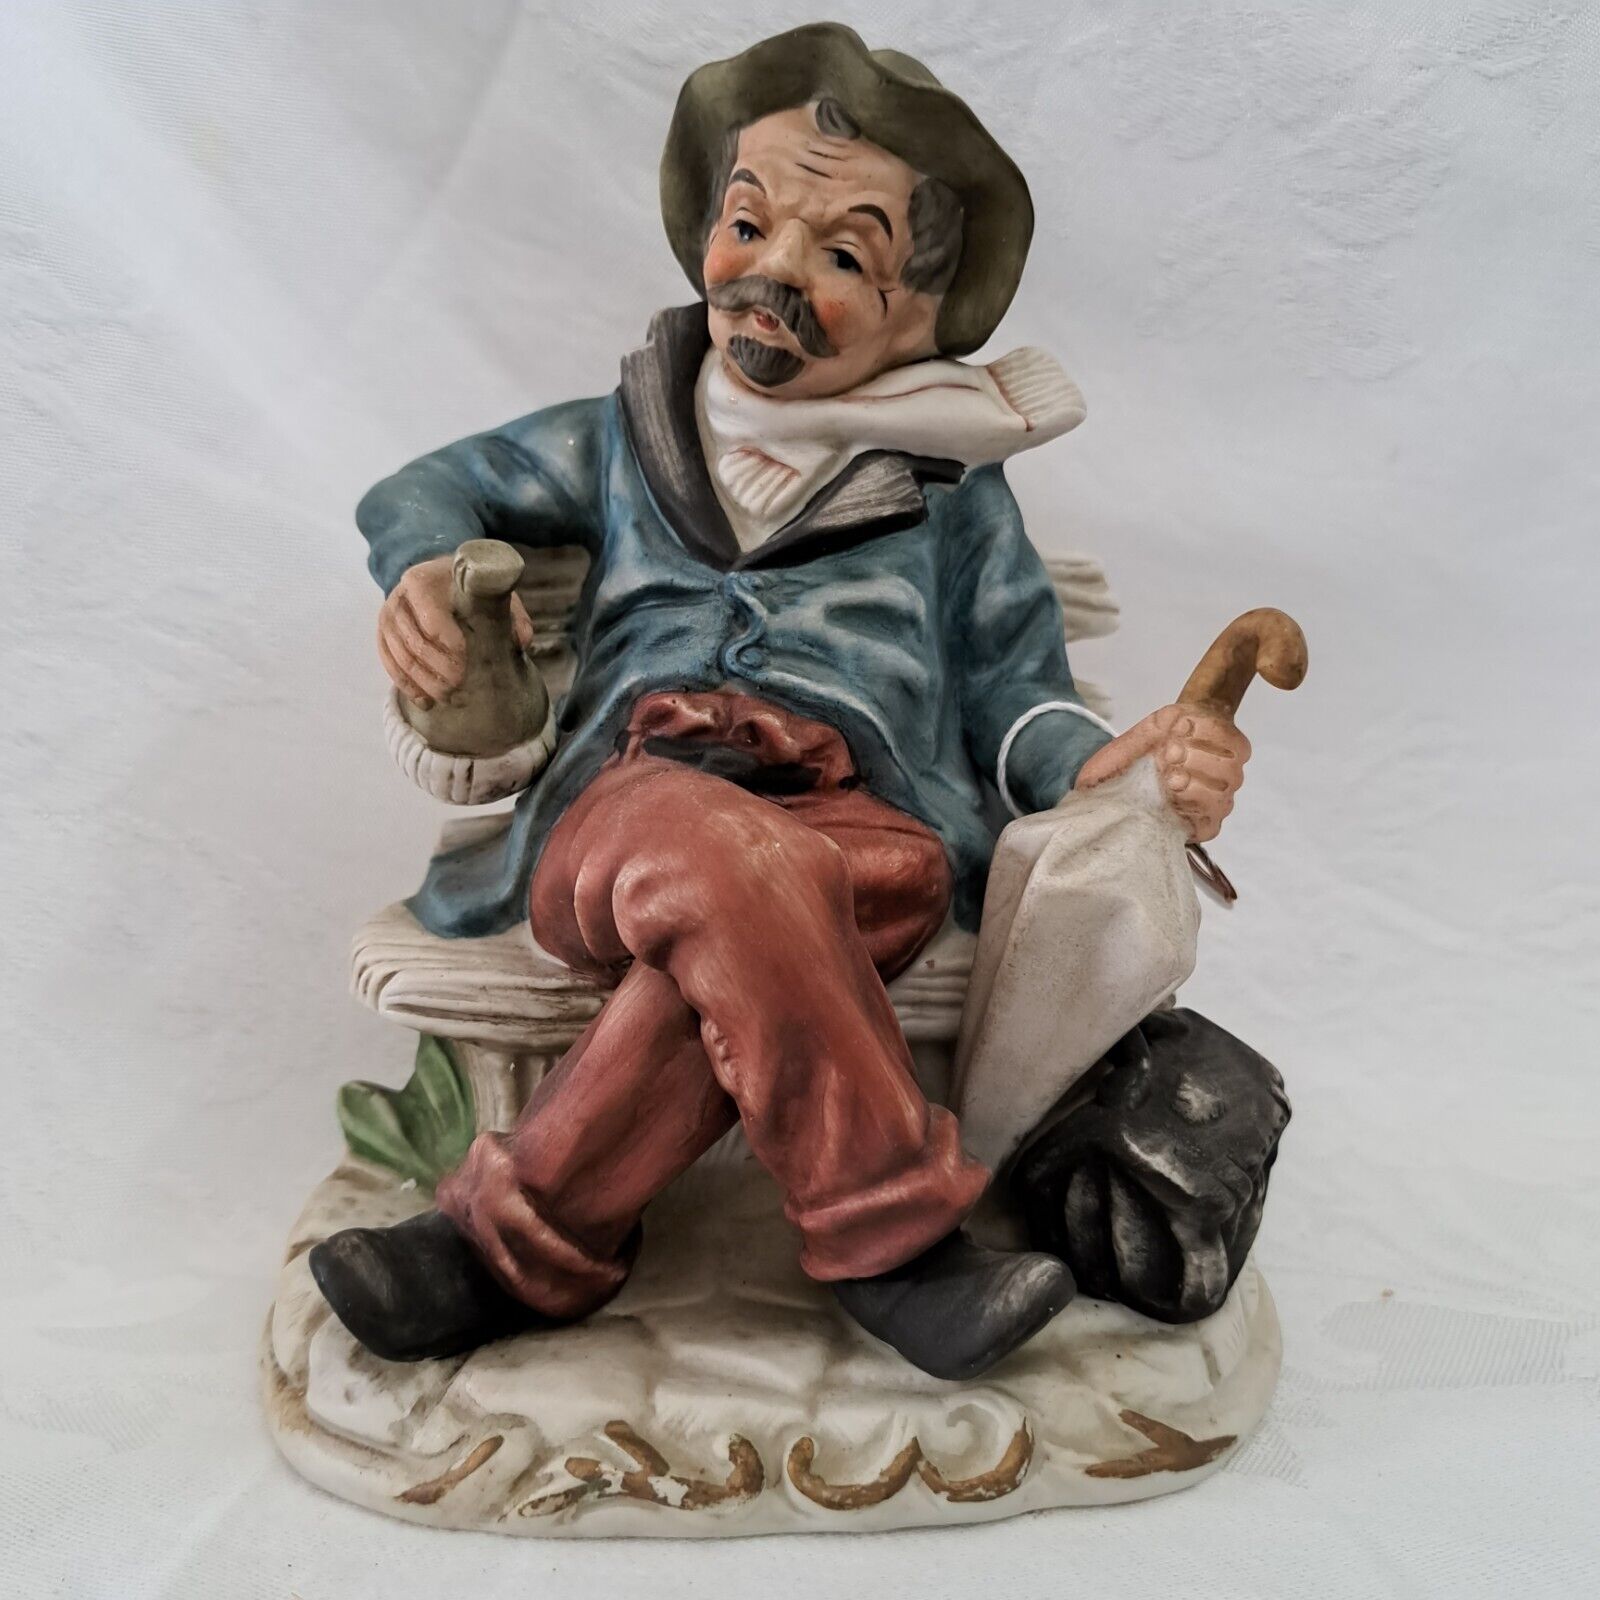 Vintage Drunk Man Hobo Sitting On Bench Figurine Porcelain Capodimonte Style